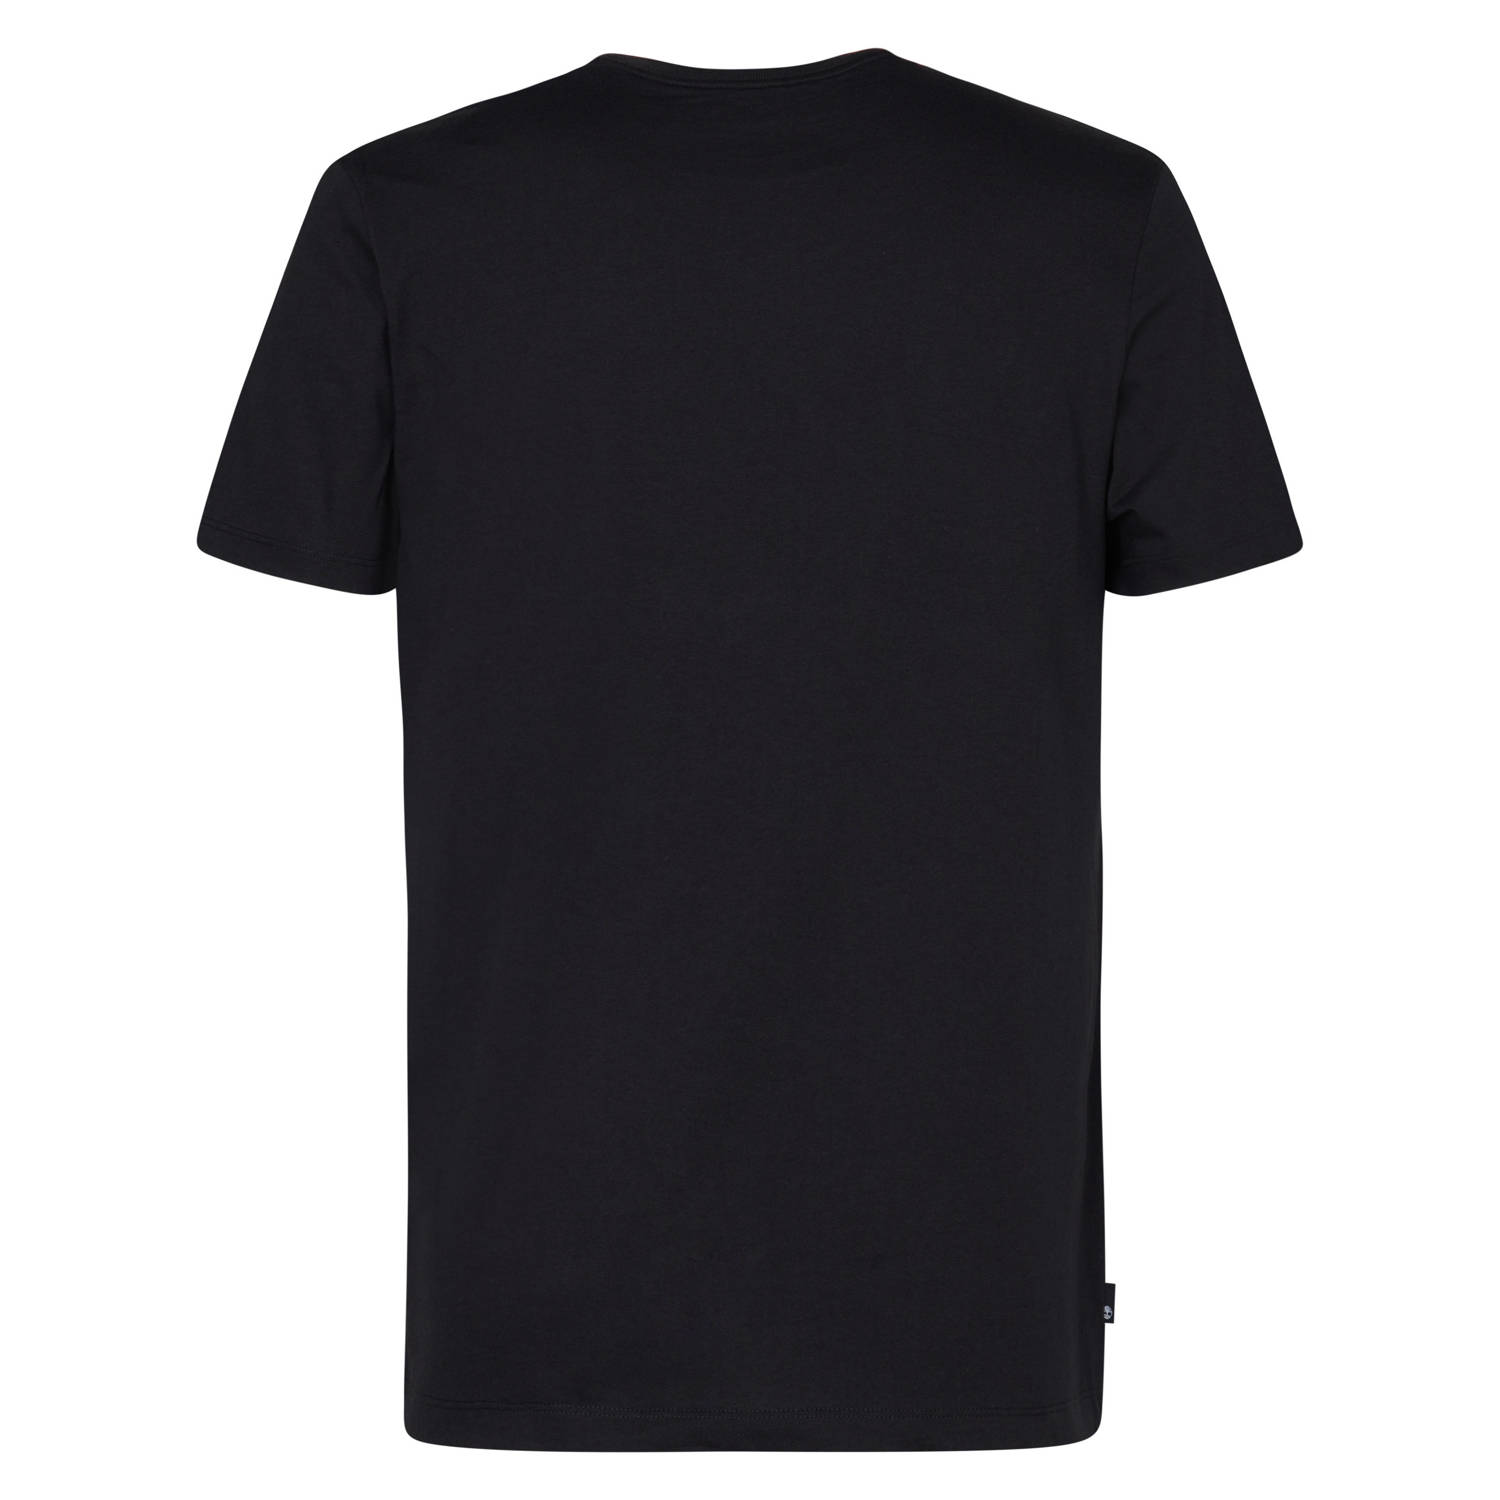 Timberland T-shirt met printopdruk zwart